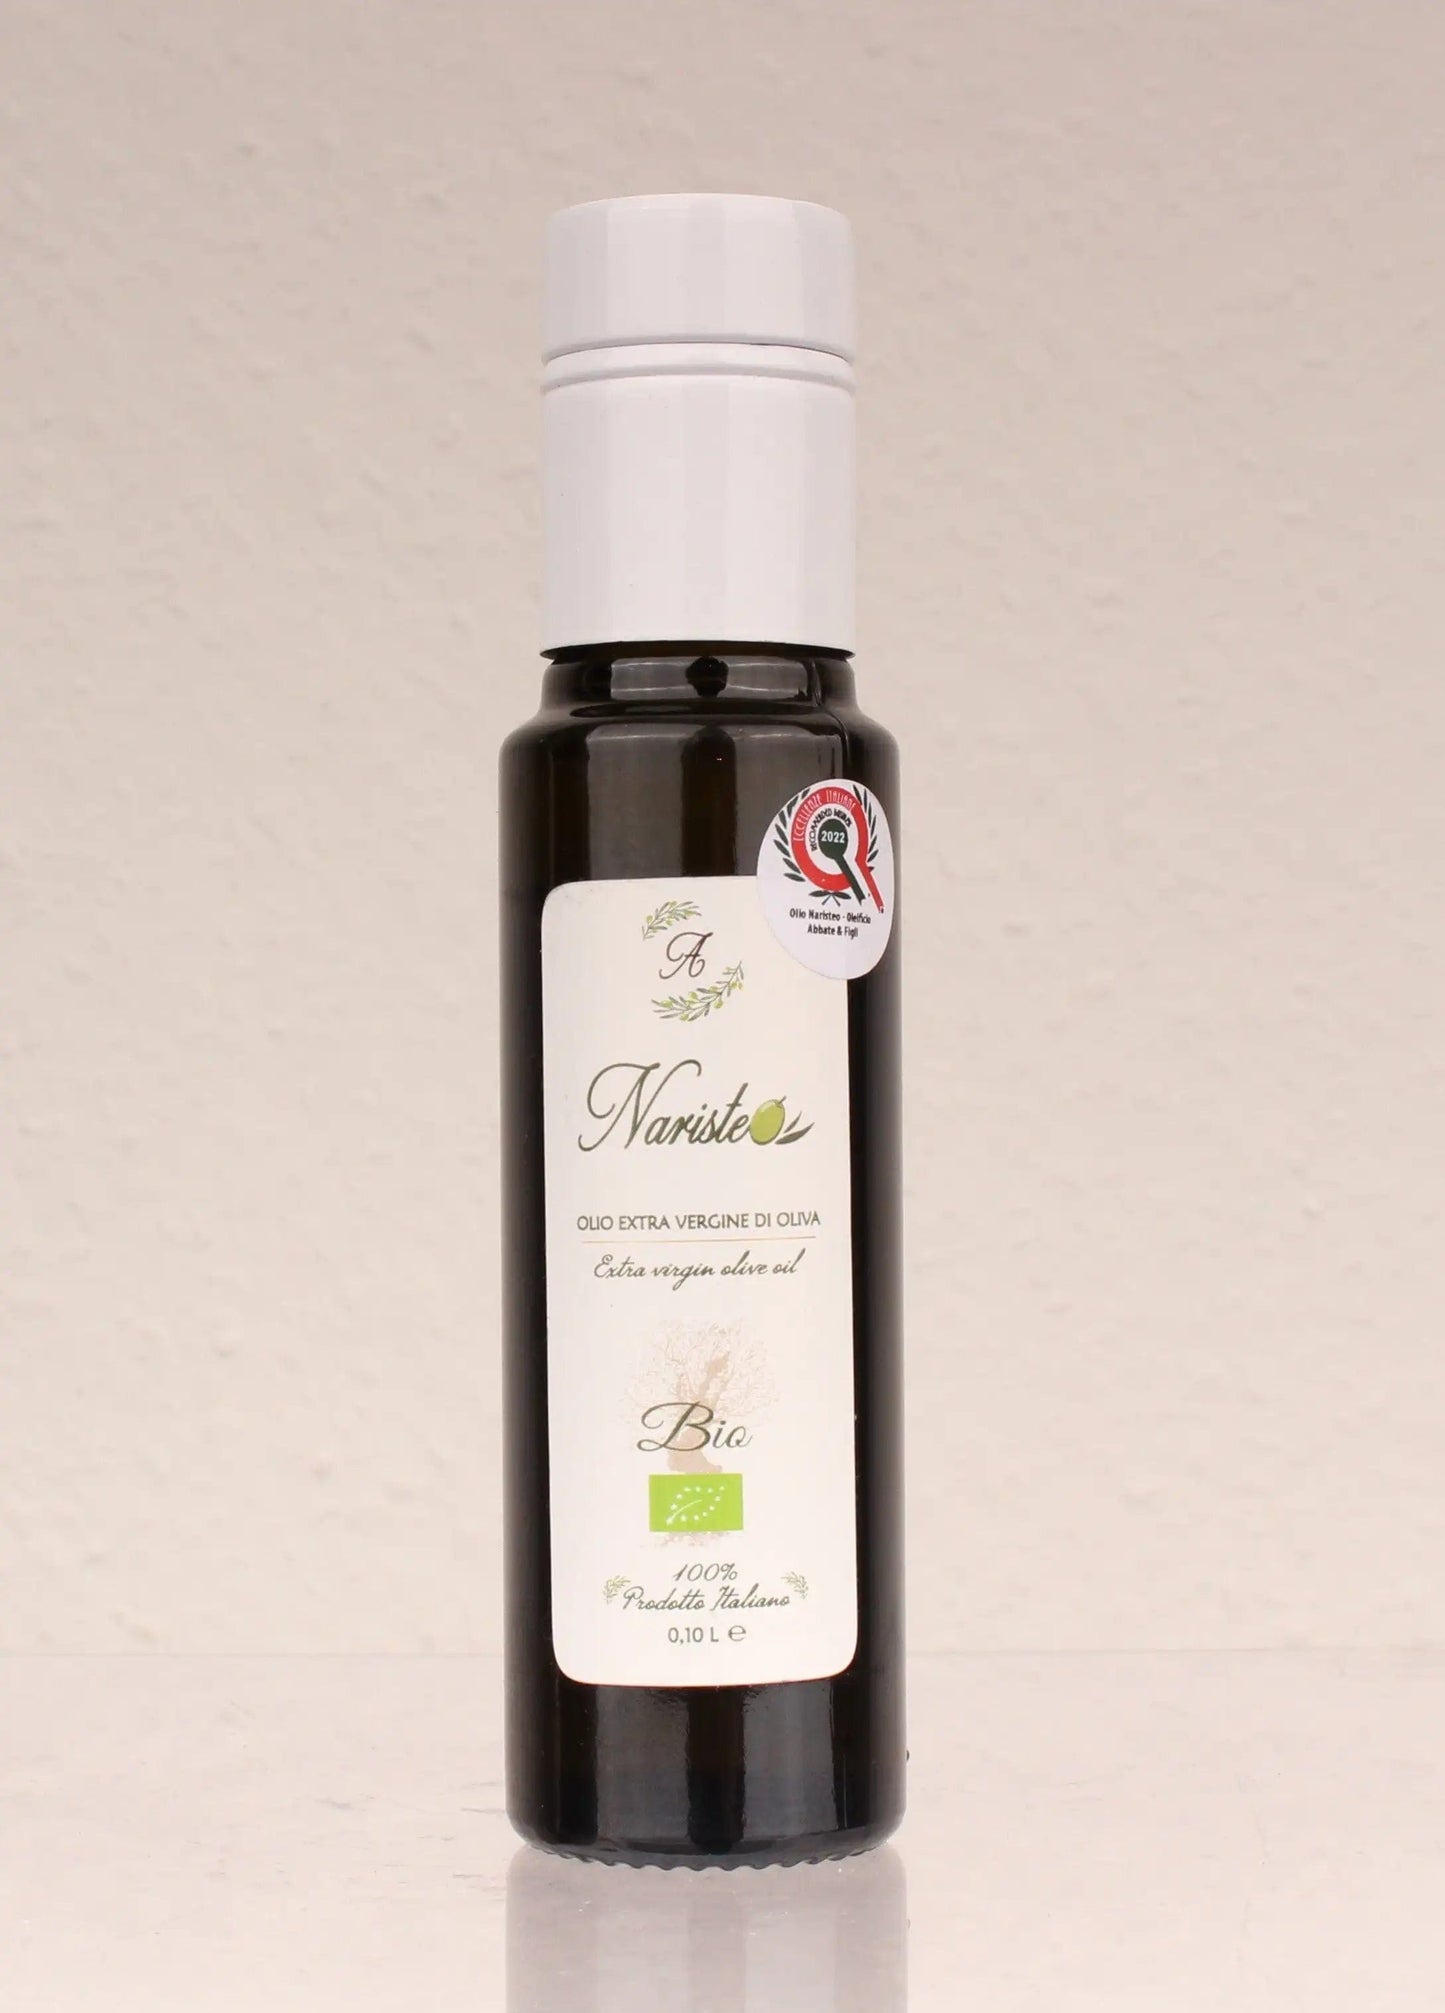 Italiving Olivenöl BIO Olivenöl Olio extra vergine di oliva von Naristeo Sizilien